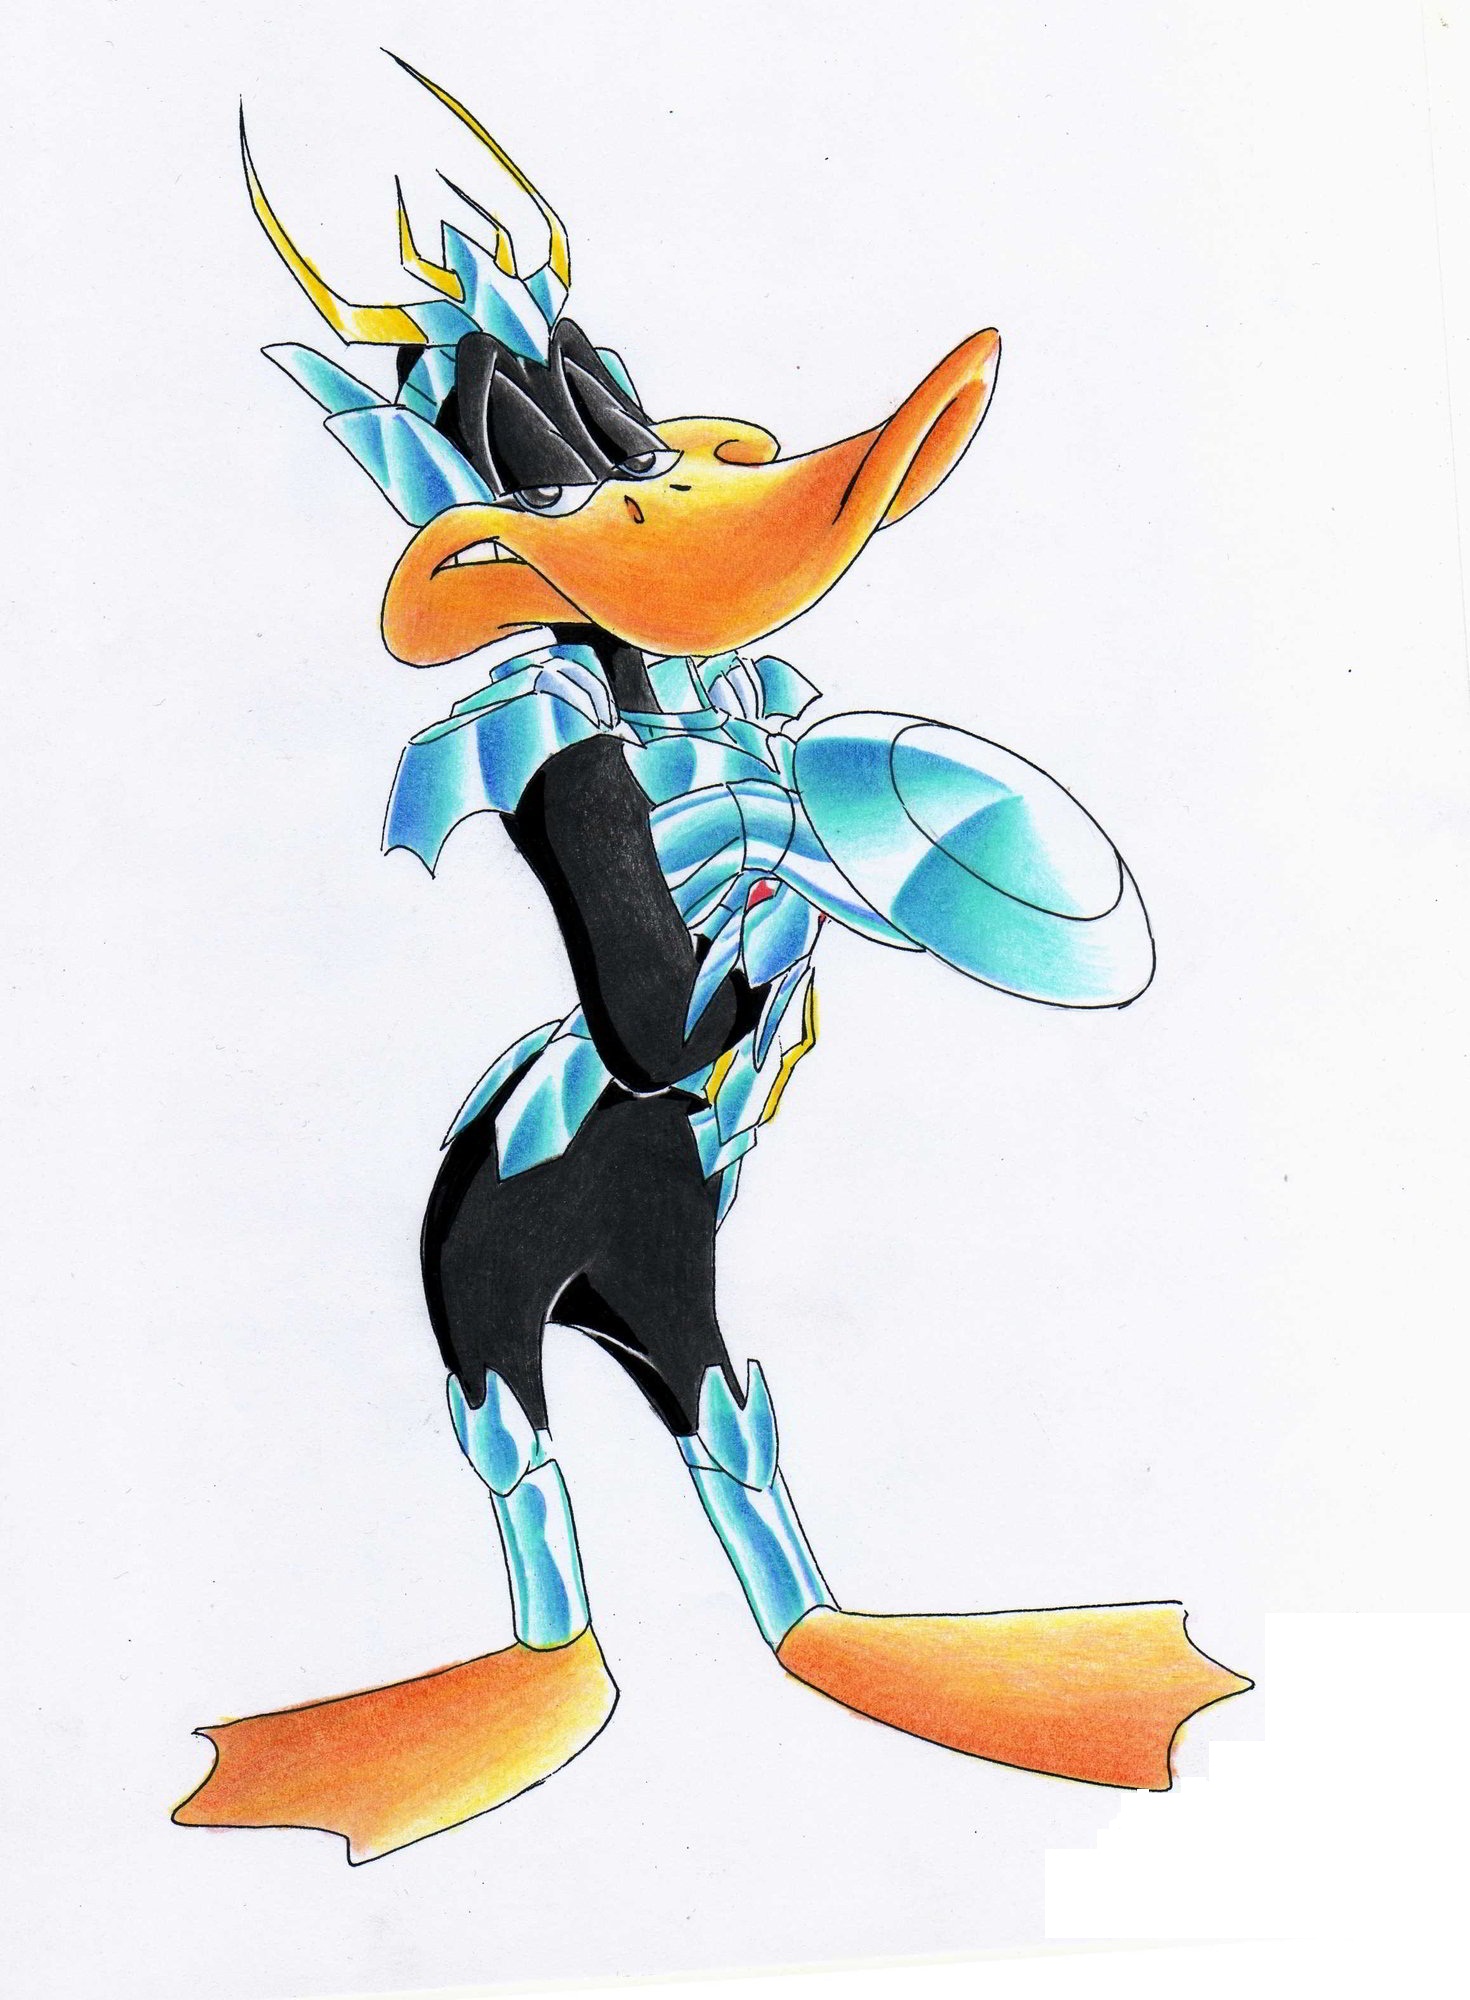 Daffy Duck #19